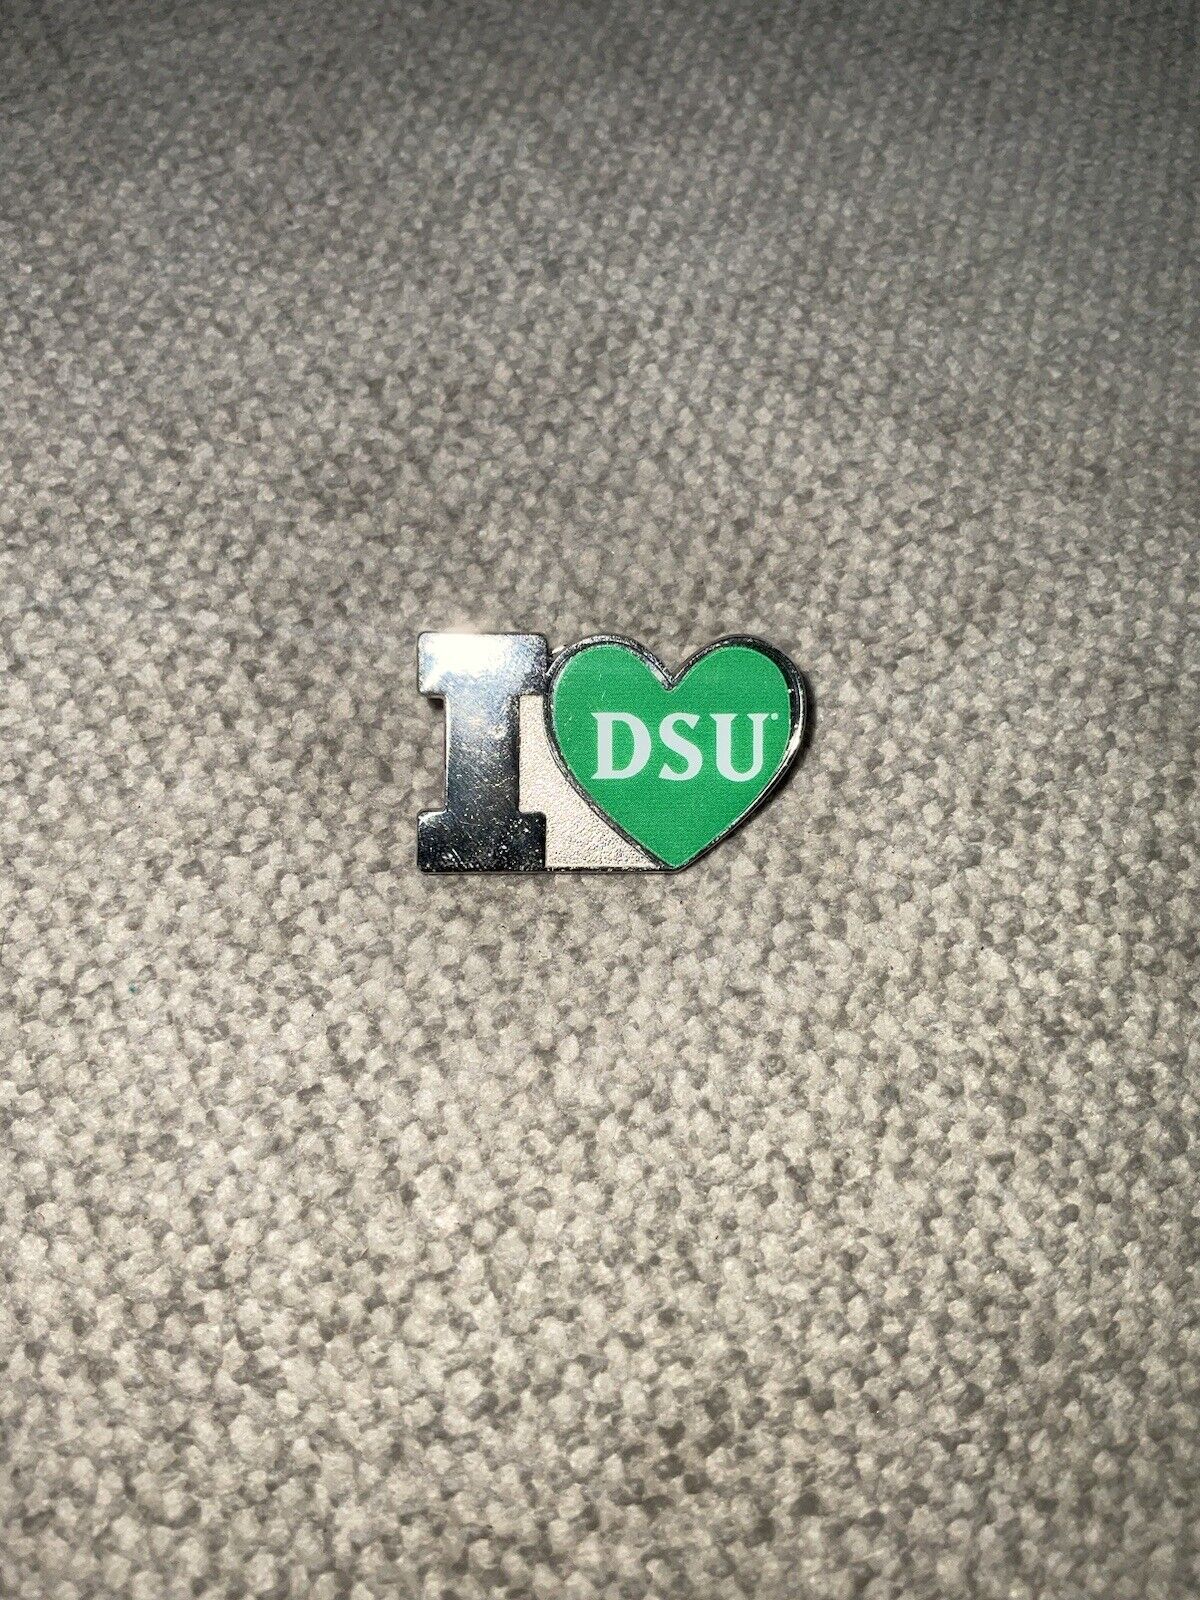 I Love DSU Pin Delta State University